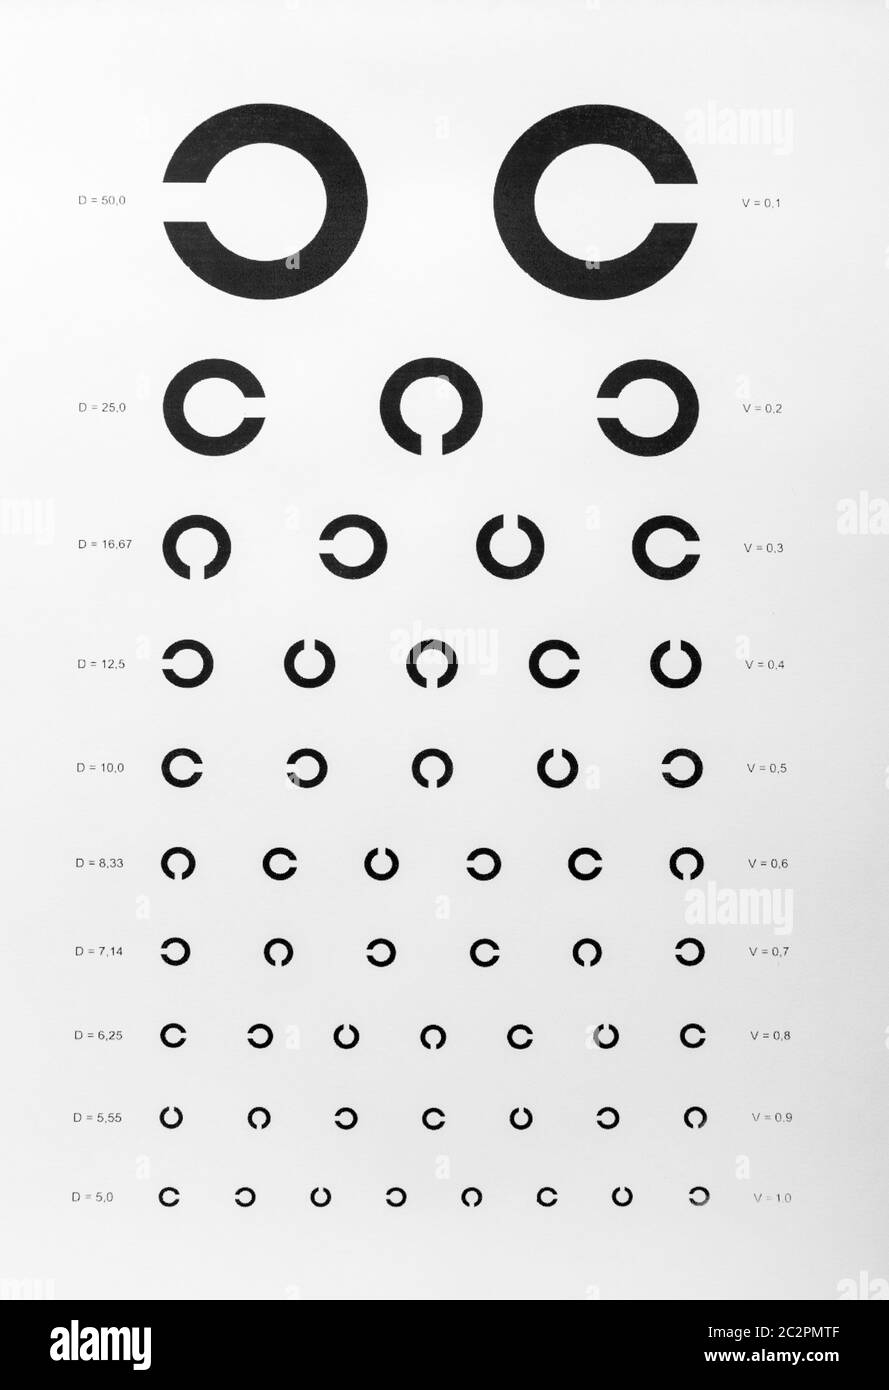 Eye examination chart used for visual acuity testing Stock Photo